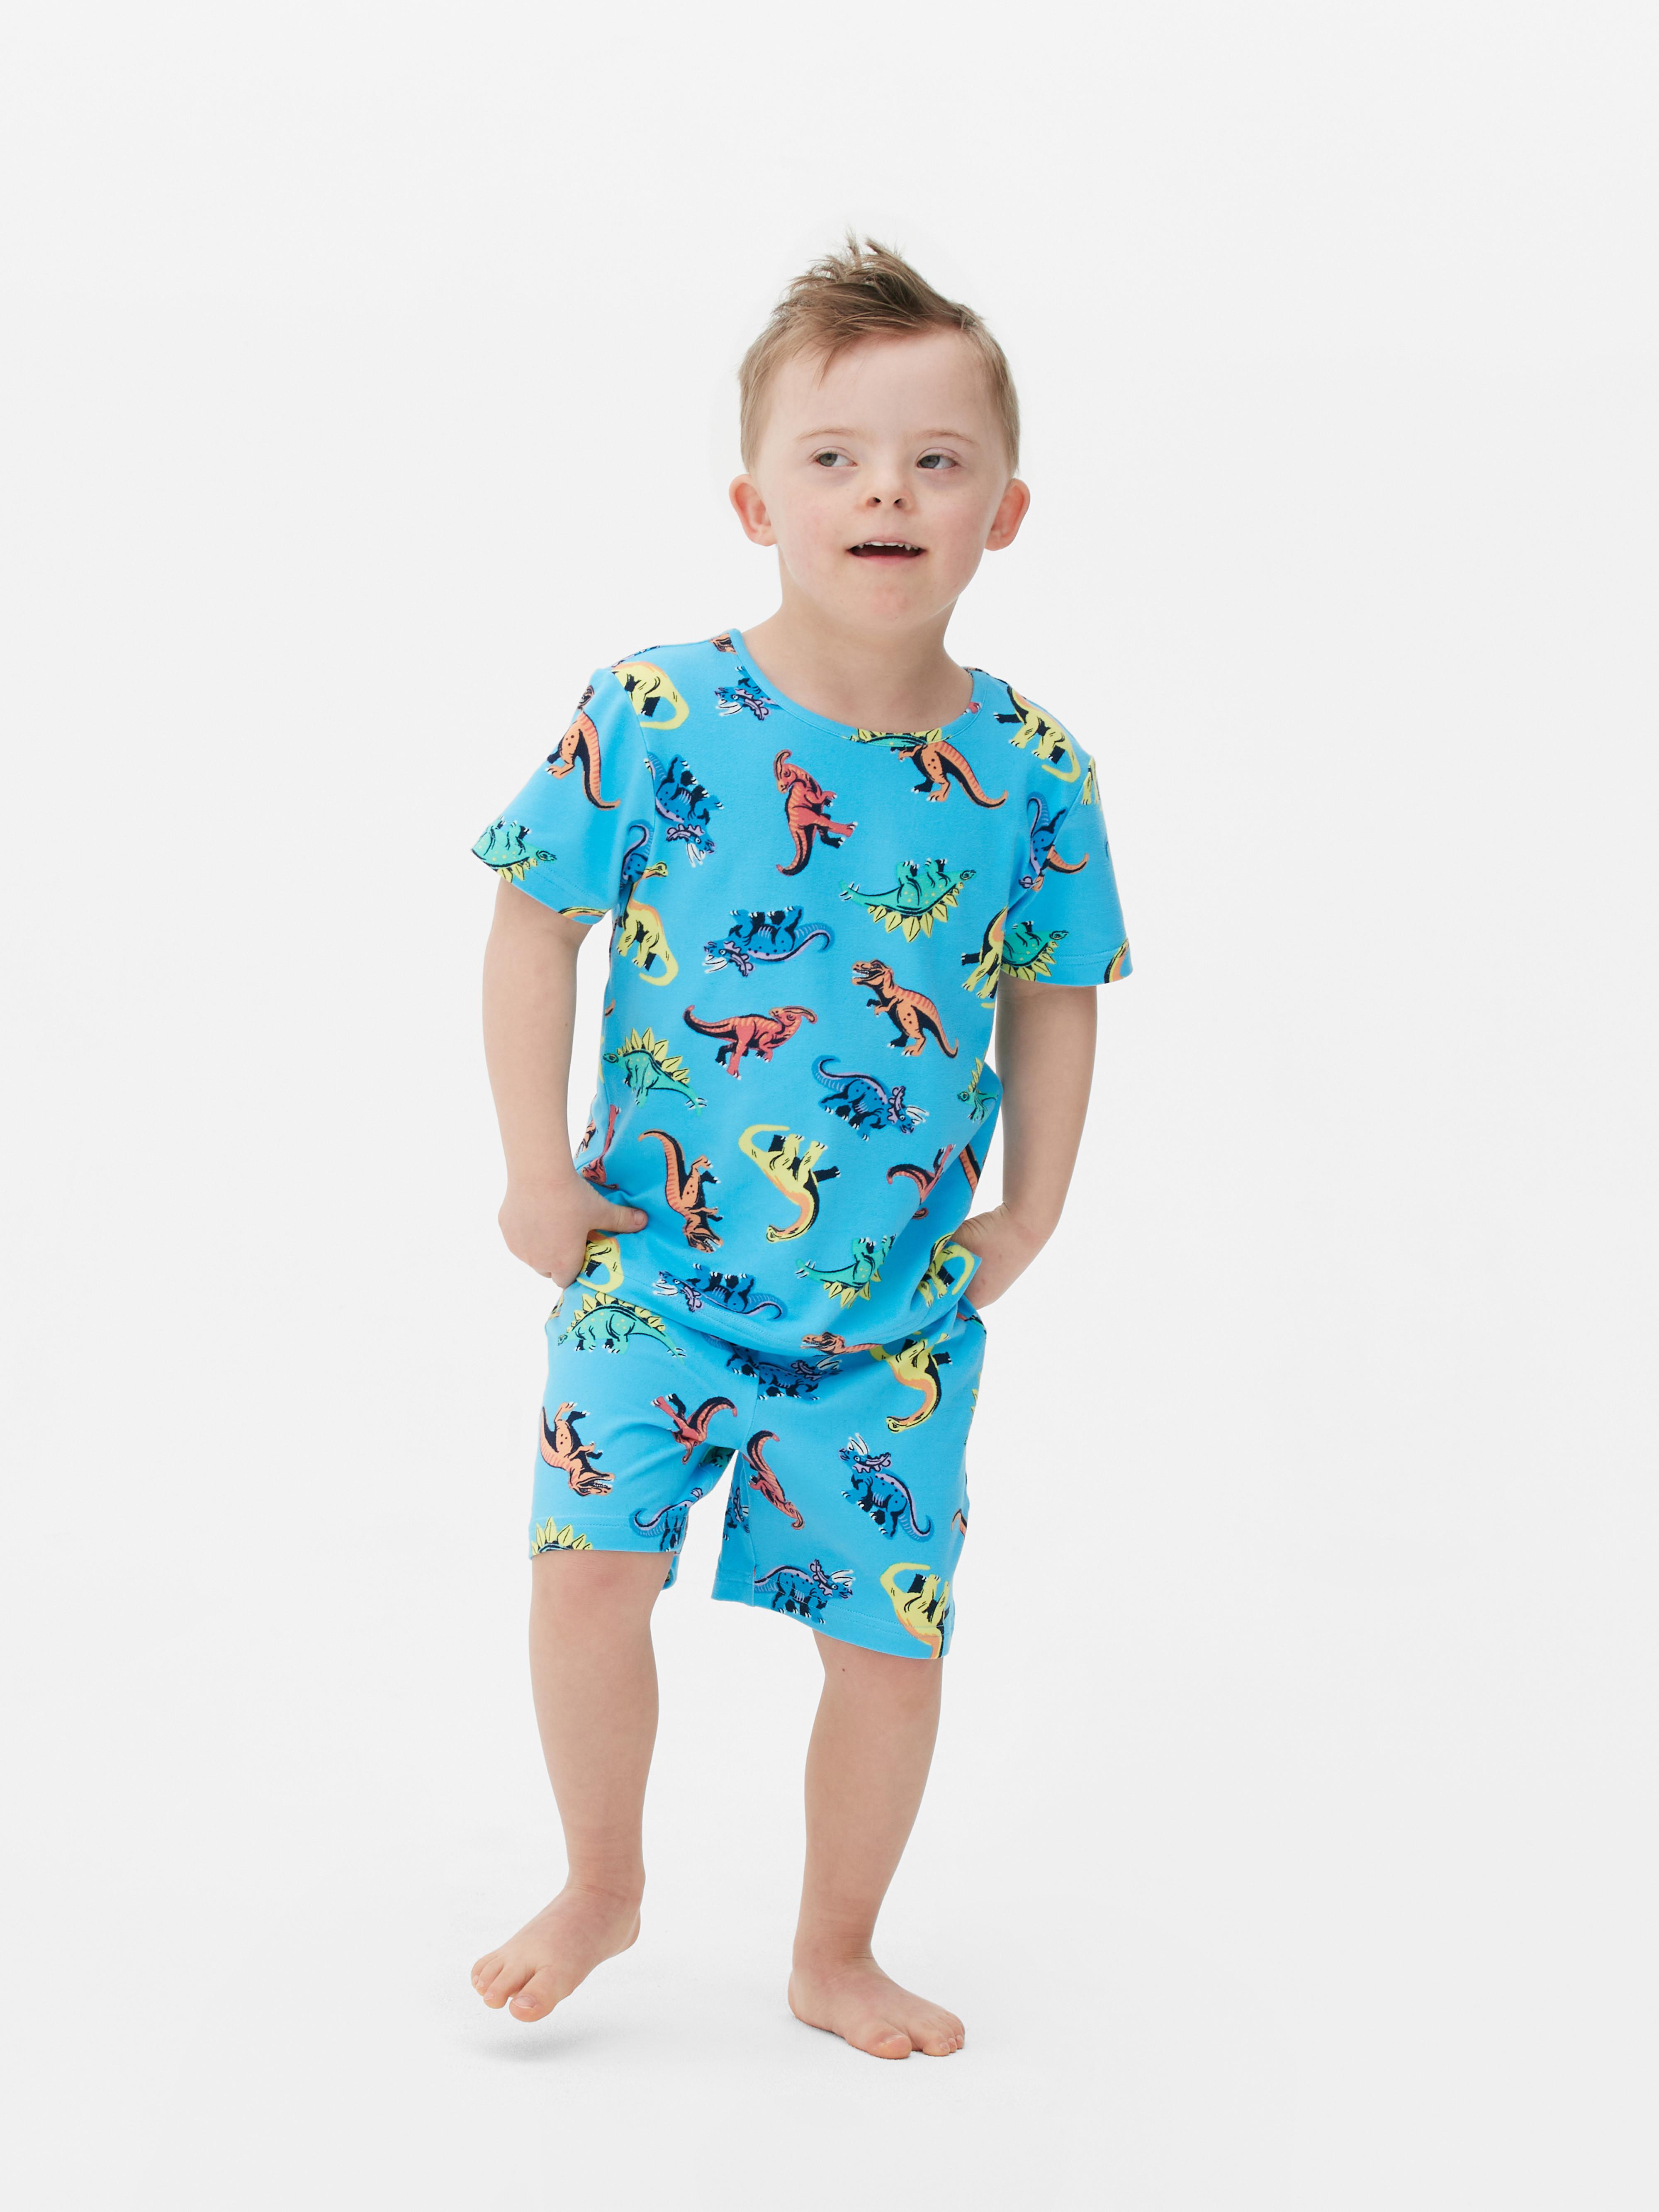 Originales pijamas infantiles de Primark